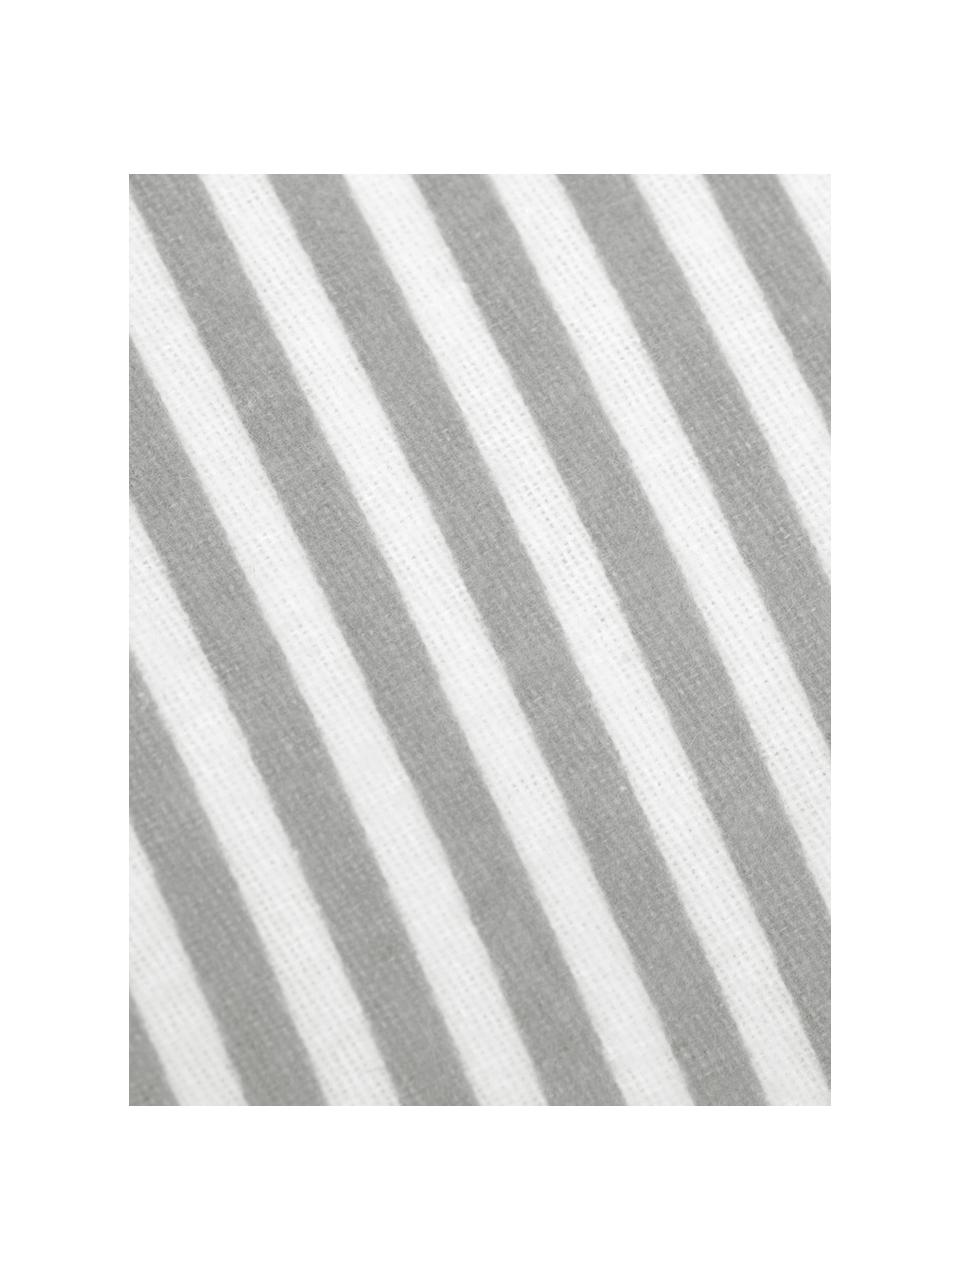 Dwustronna poszewka na poduszkę z flaneli Dora, 2 szt., Biały, szary, S 40 x D 80 cm